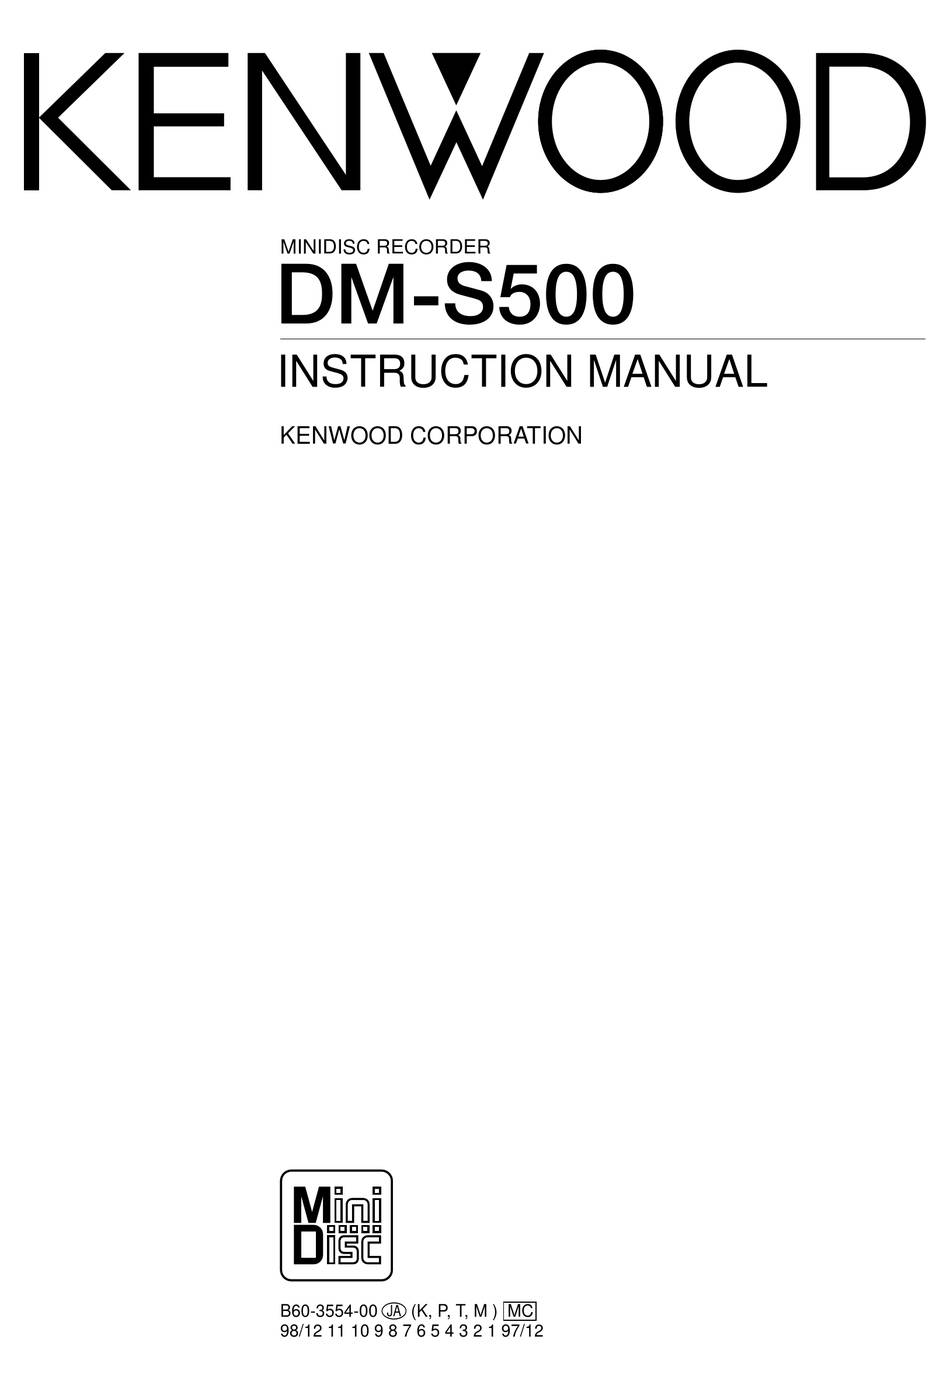 Kenwood DM-S500